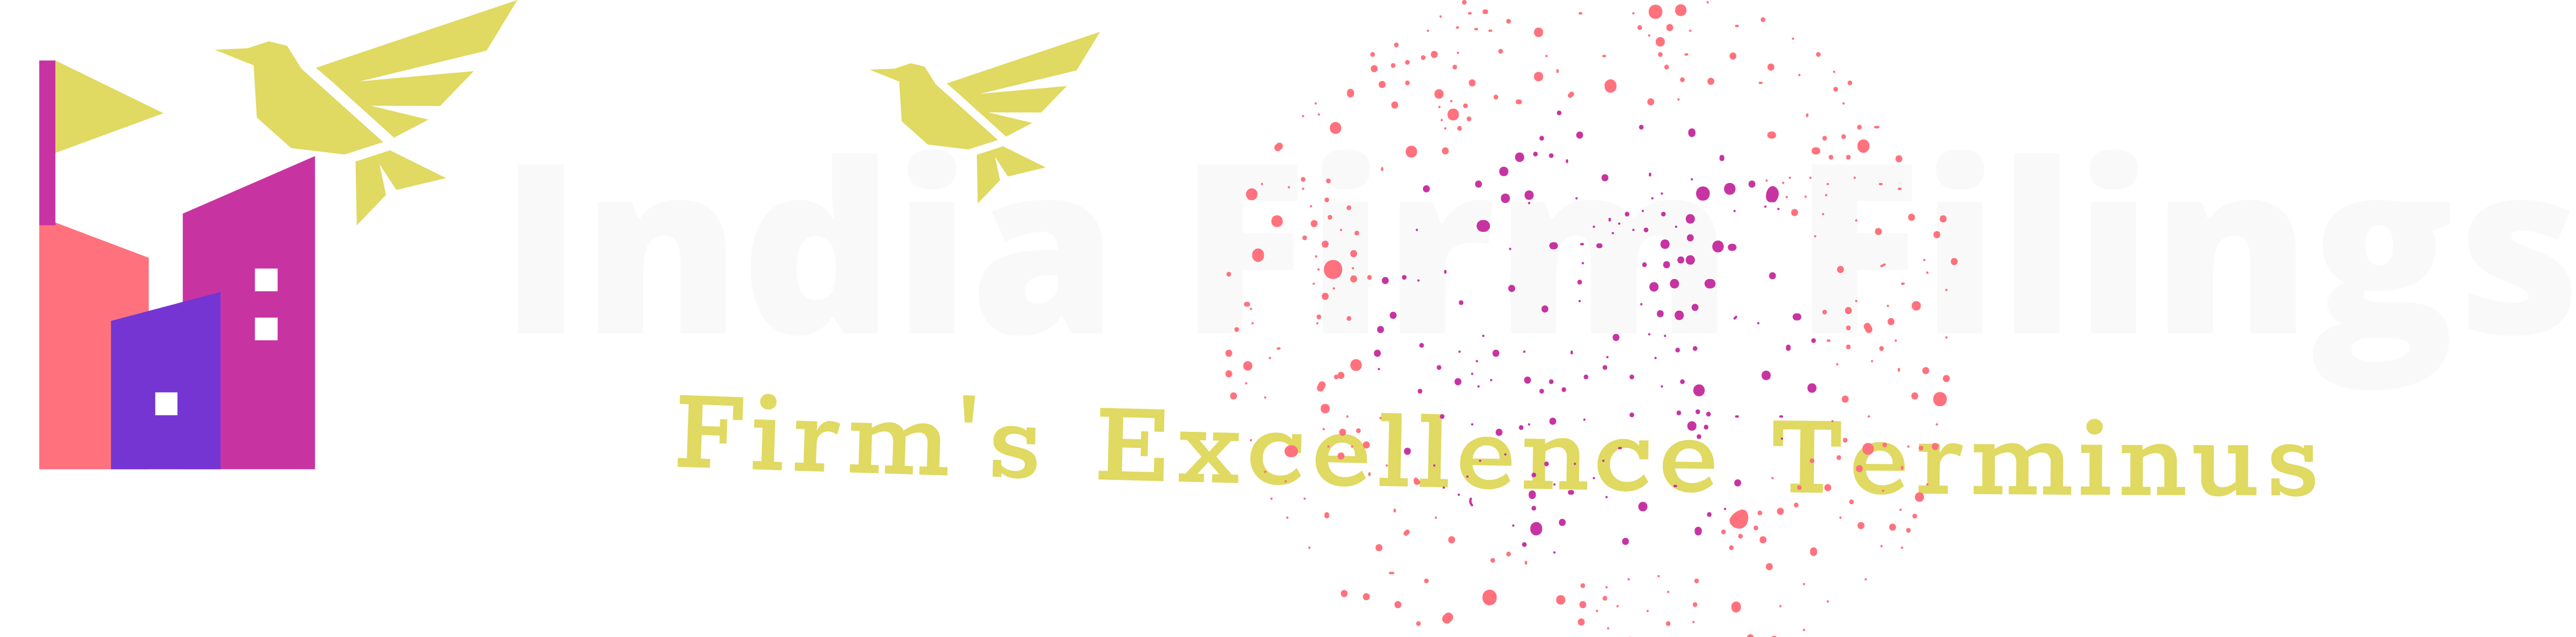 India firm filings logo